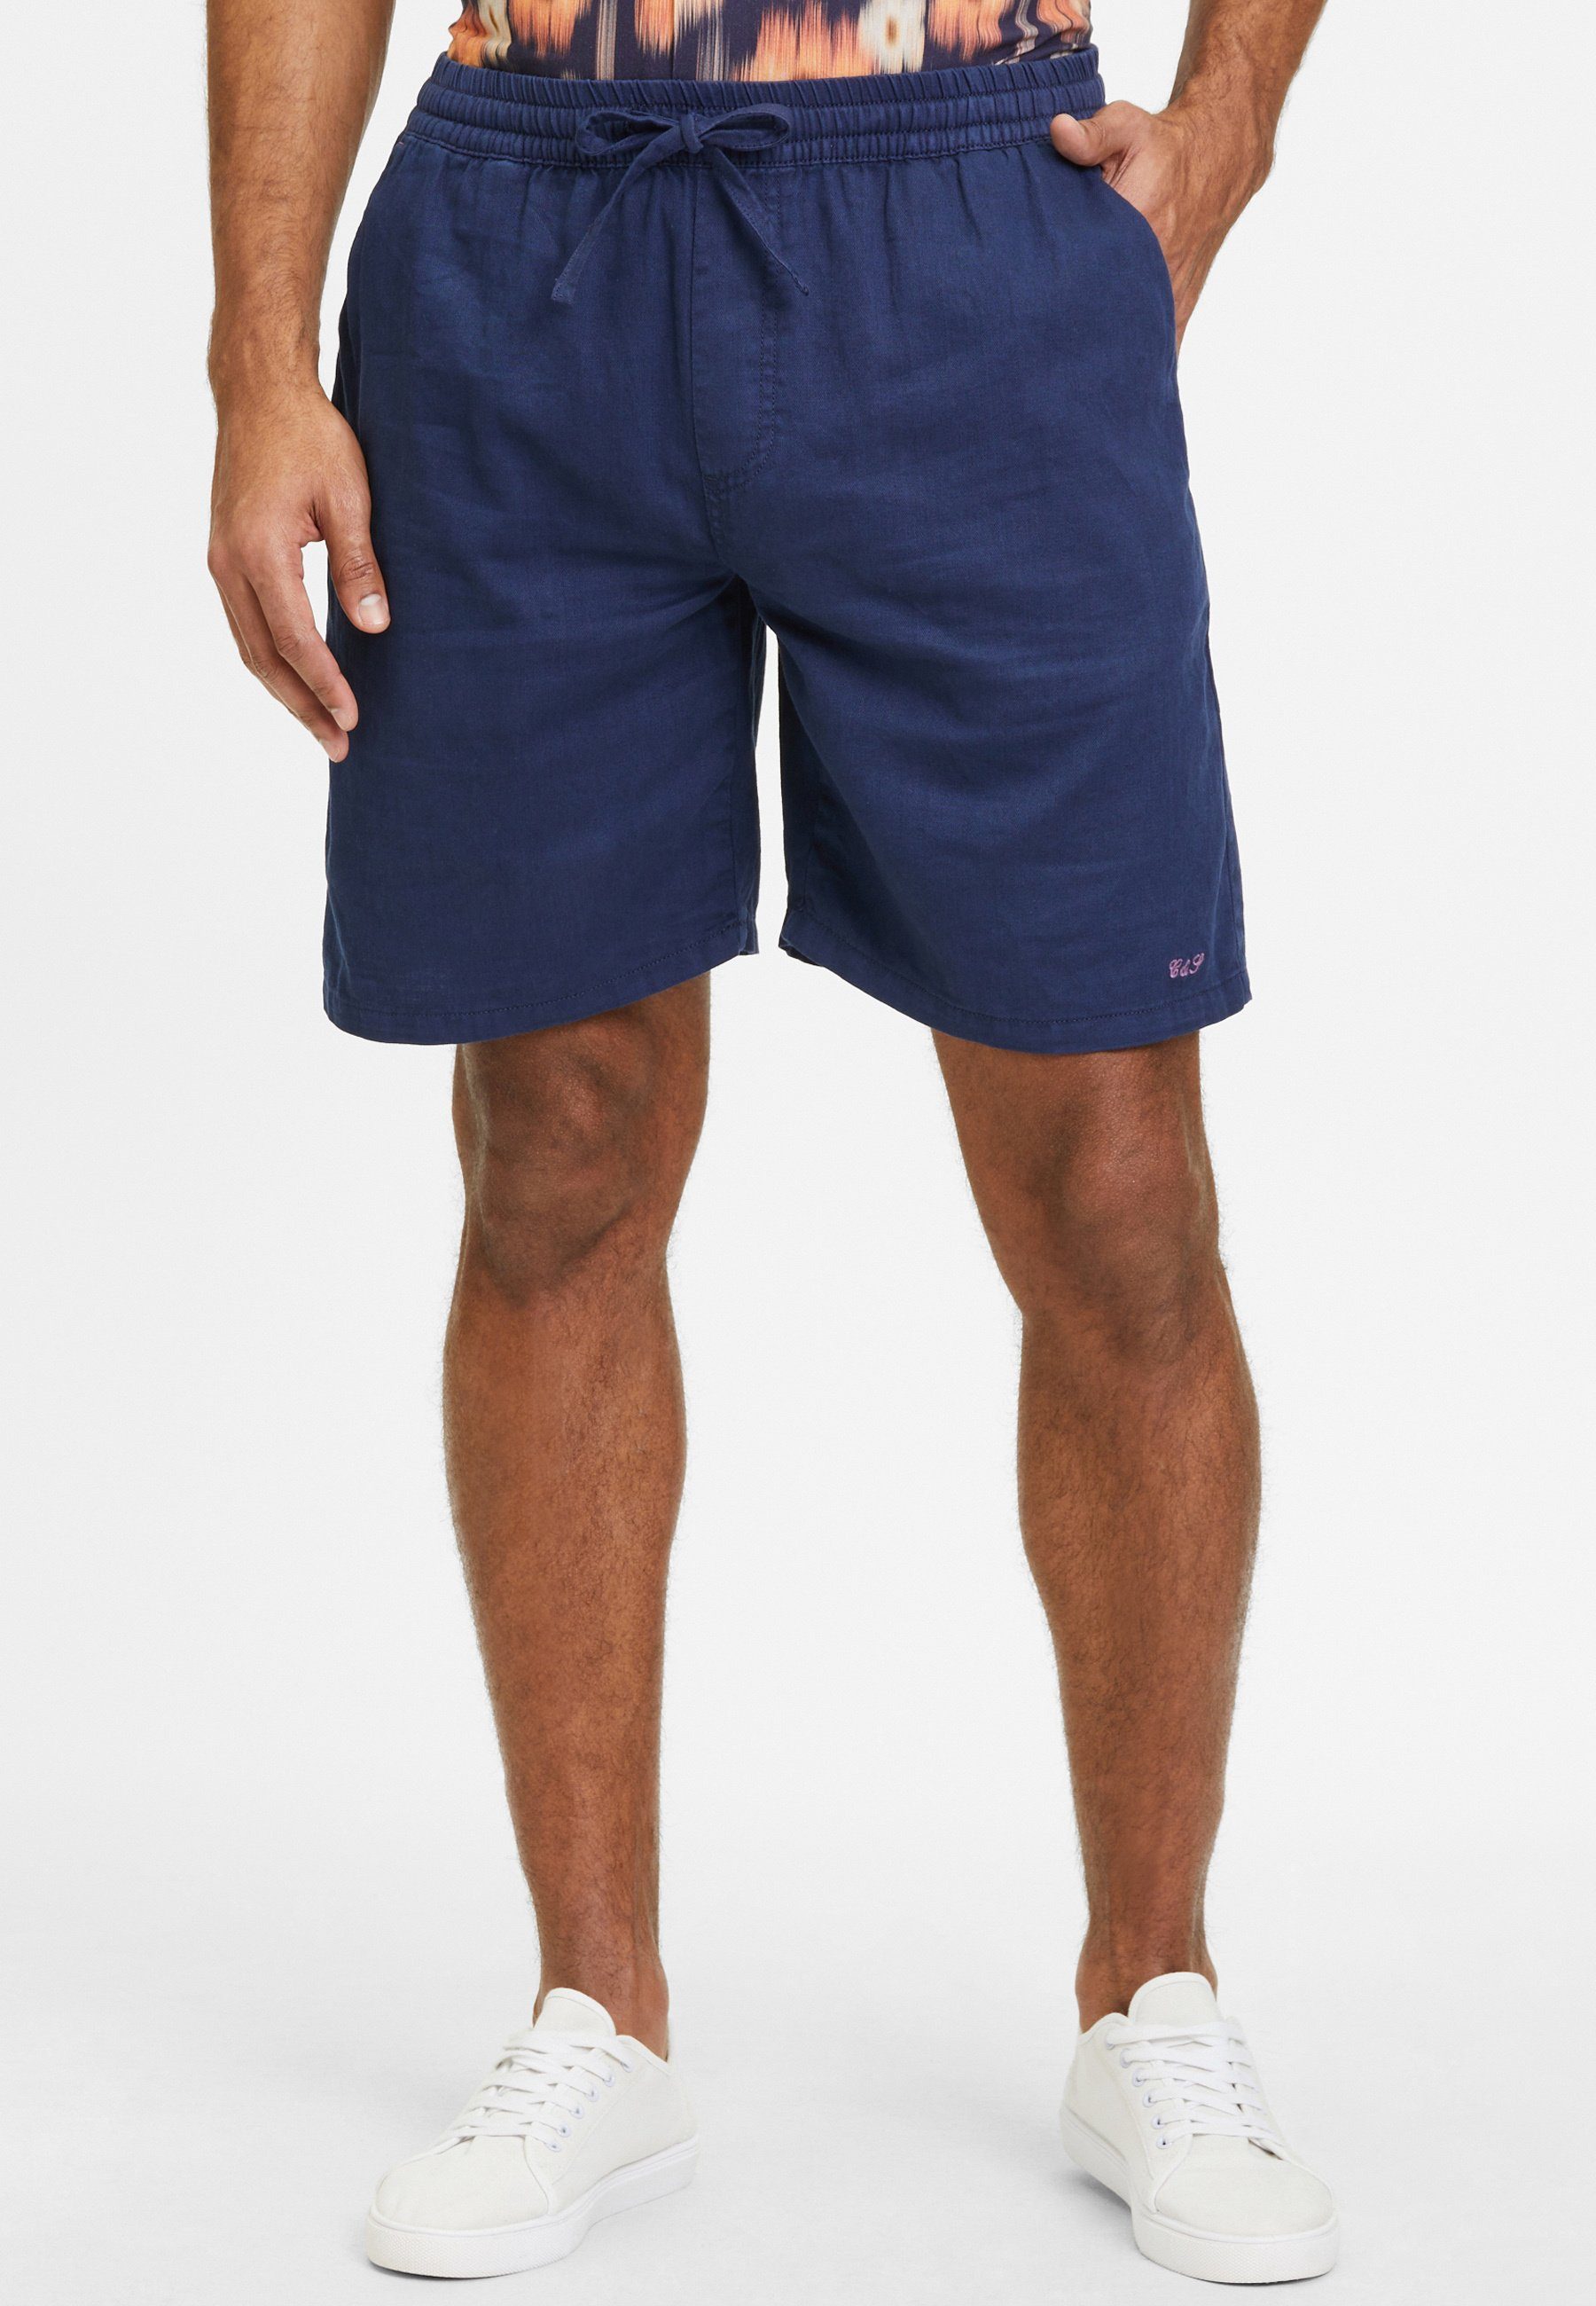 & Shorts sons Leinen-mischung colours Shorts